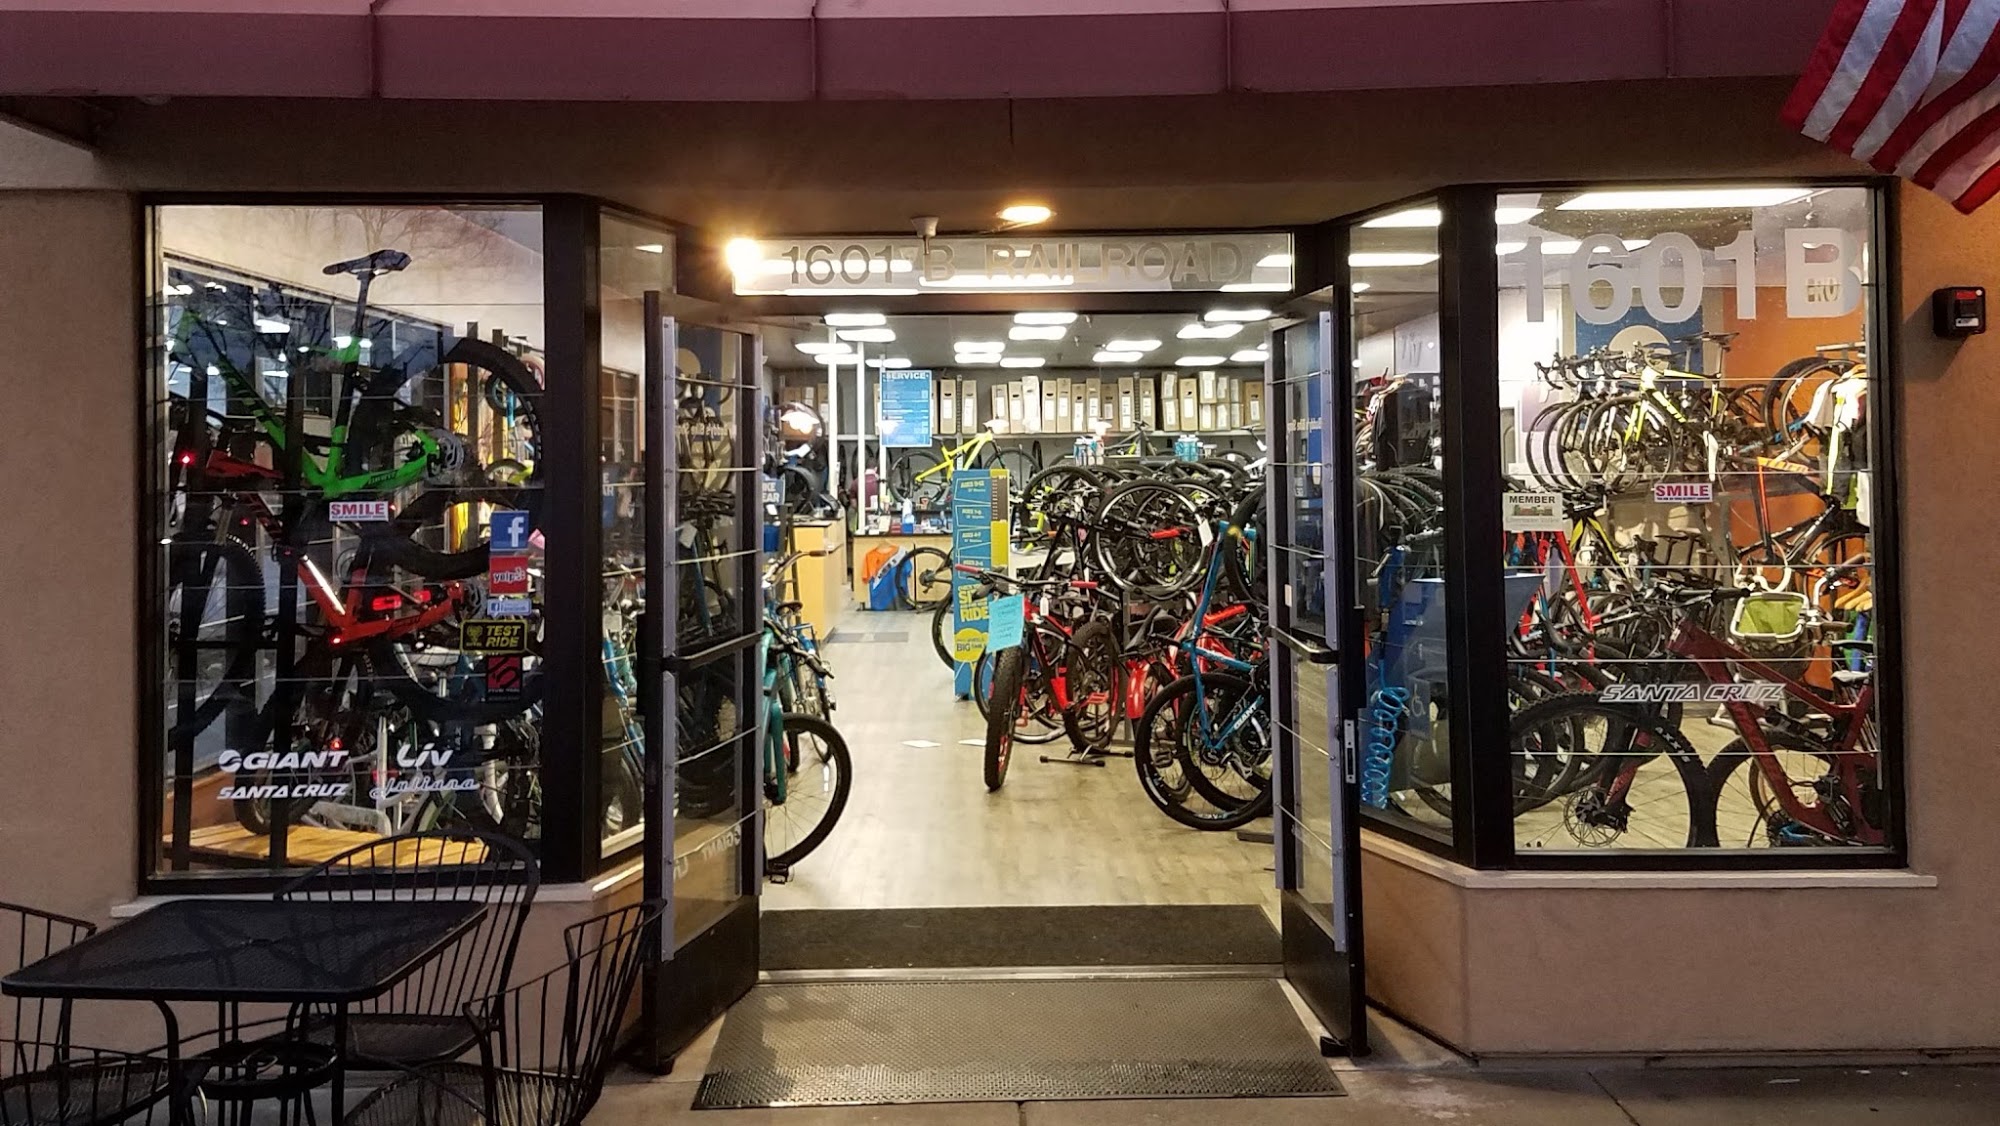 My Buddy's Bike Shop